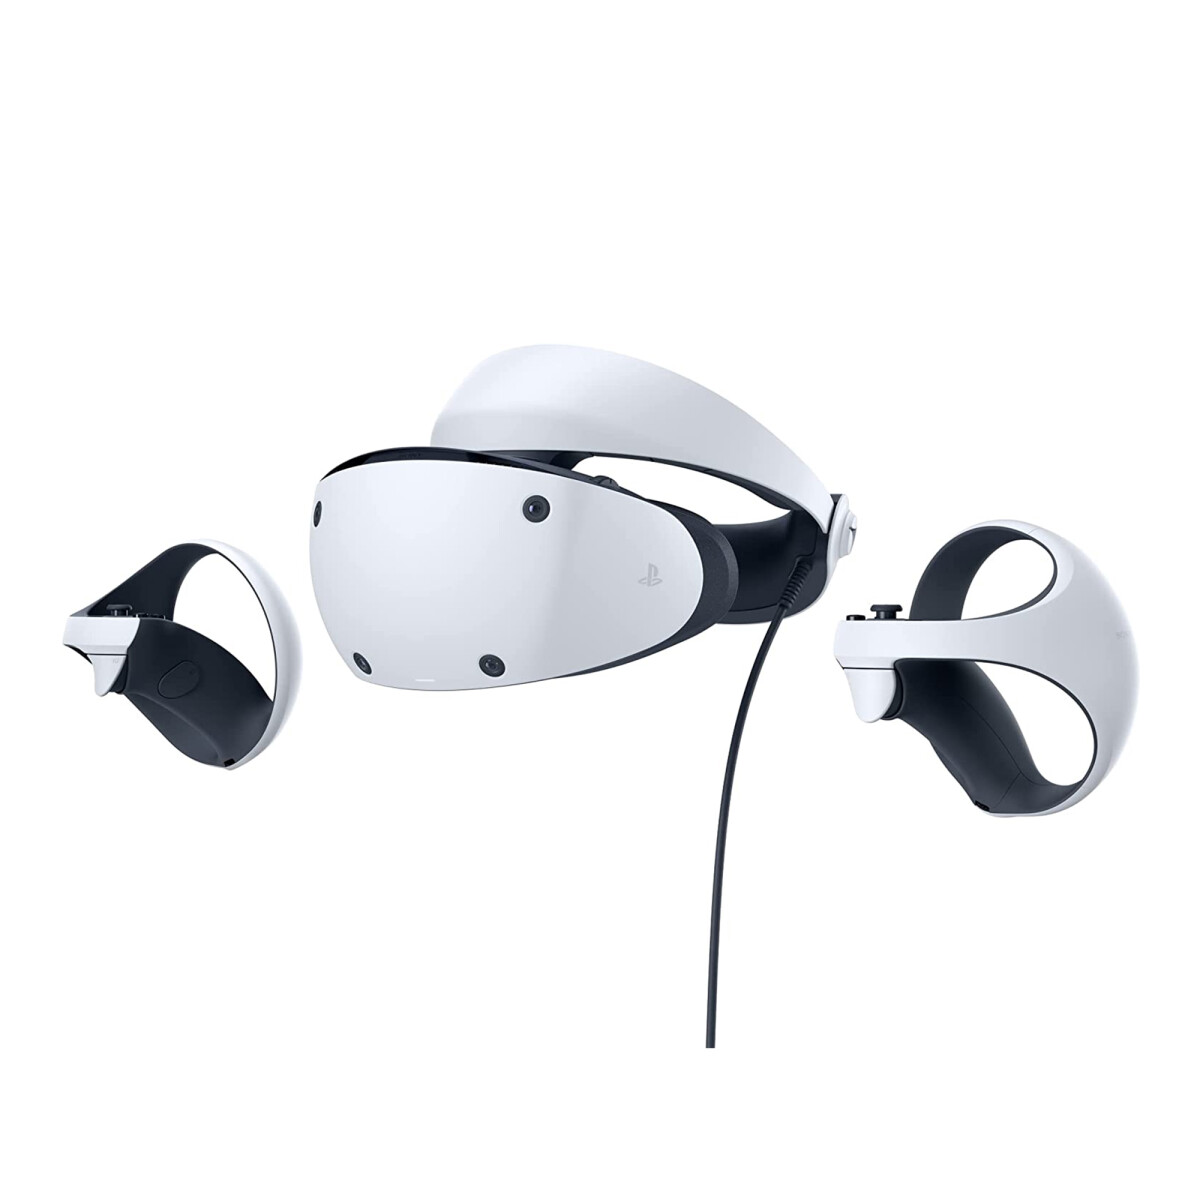 Sony - Lentes de Realidad Virtual VR2 - Oled. 2000 X 2040 por Ojo. 90 Hz, 120 Hz. 110º. 4 Cámaras + 